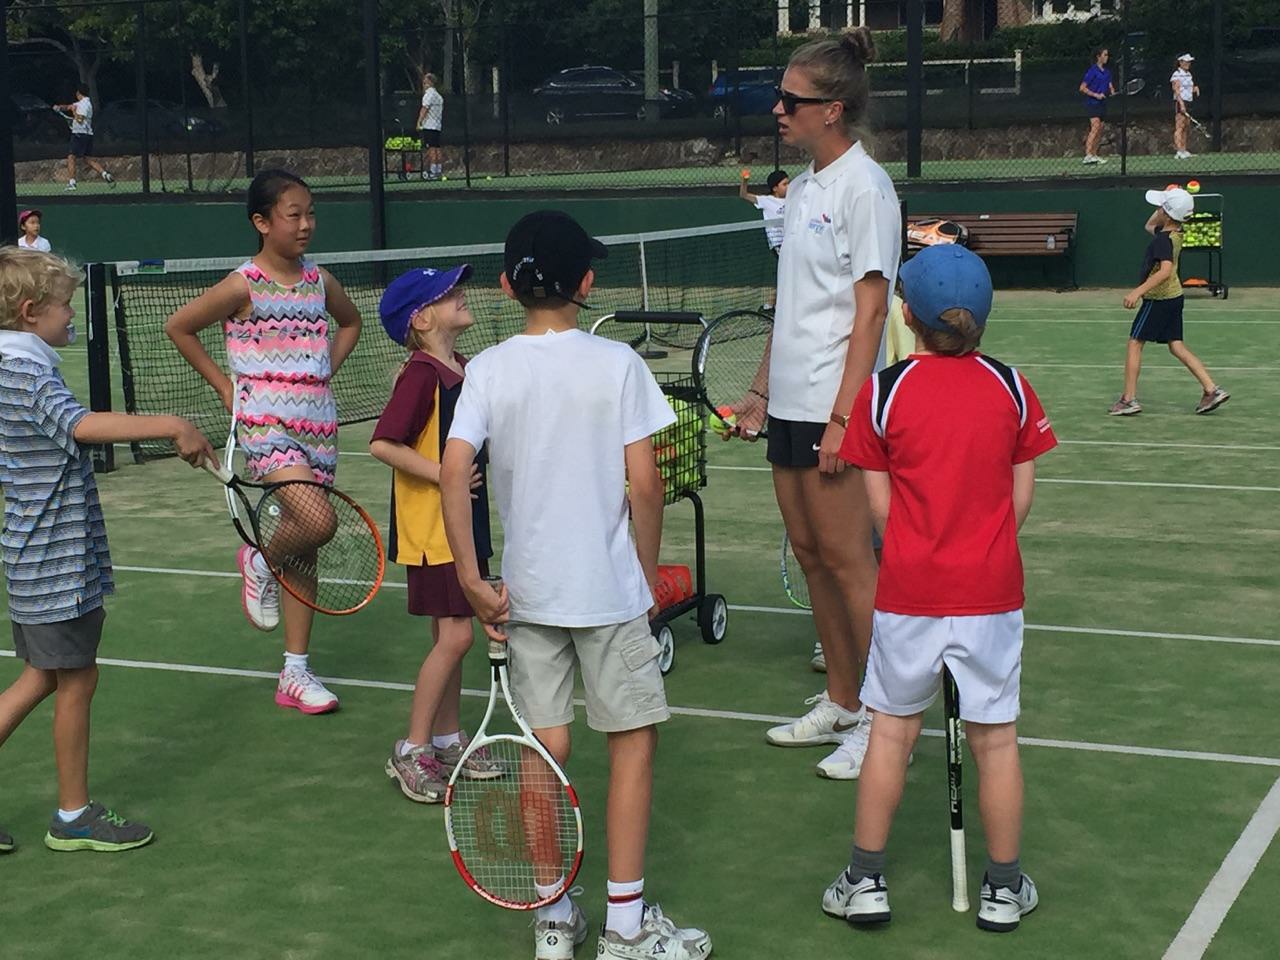 Tennis Lessons For Kids - Inspire Tennis Sydney